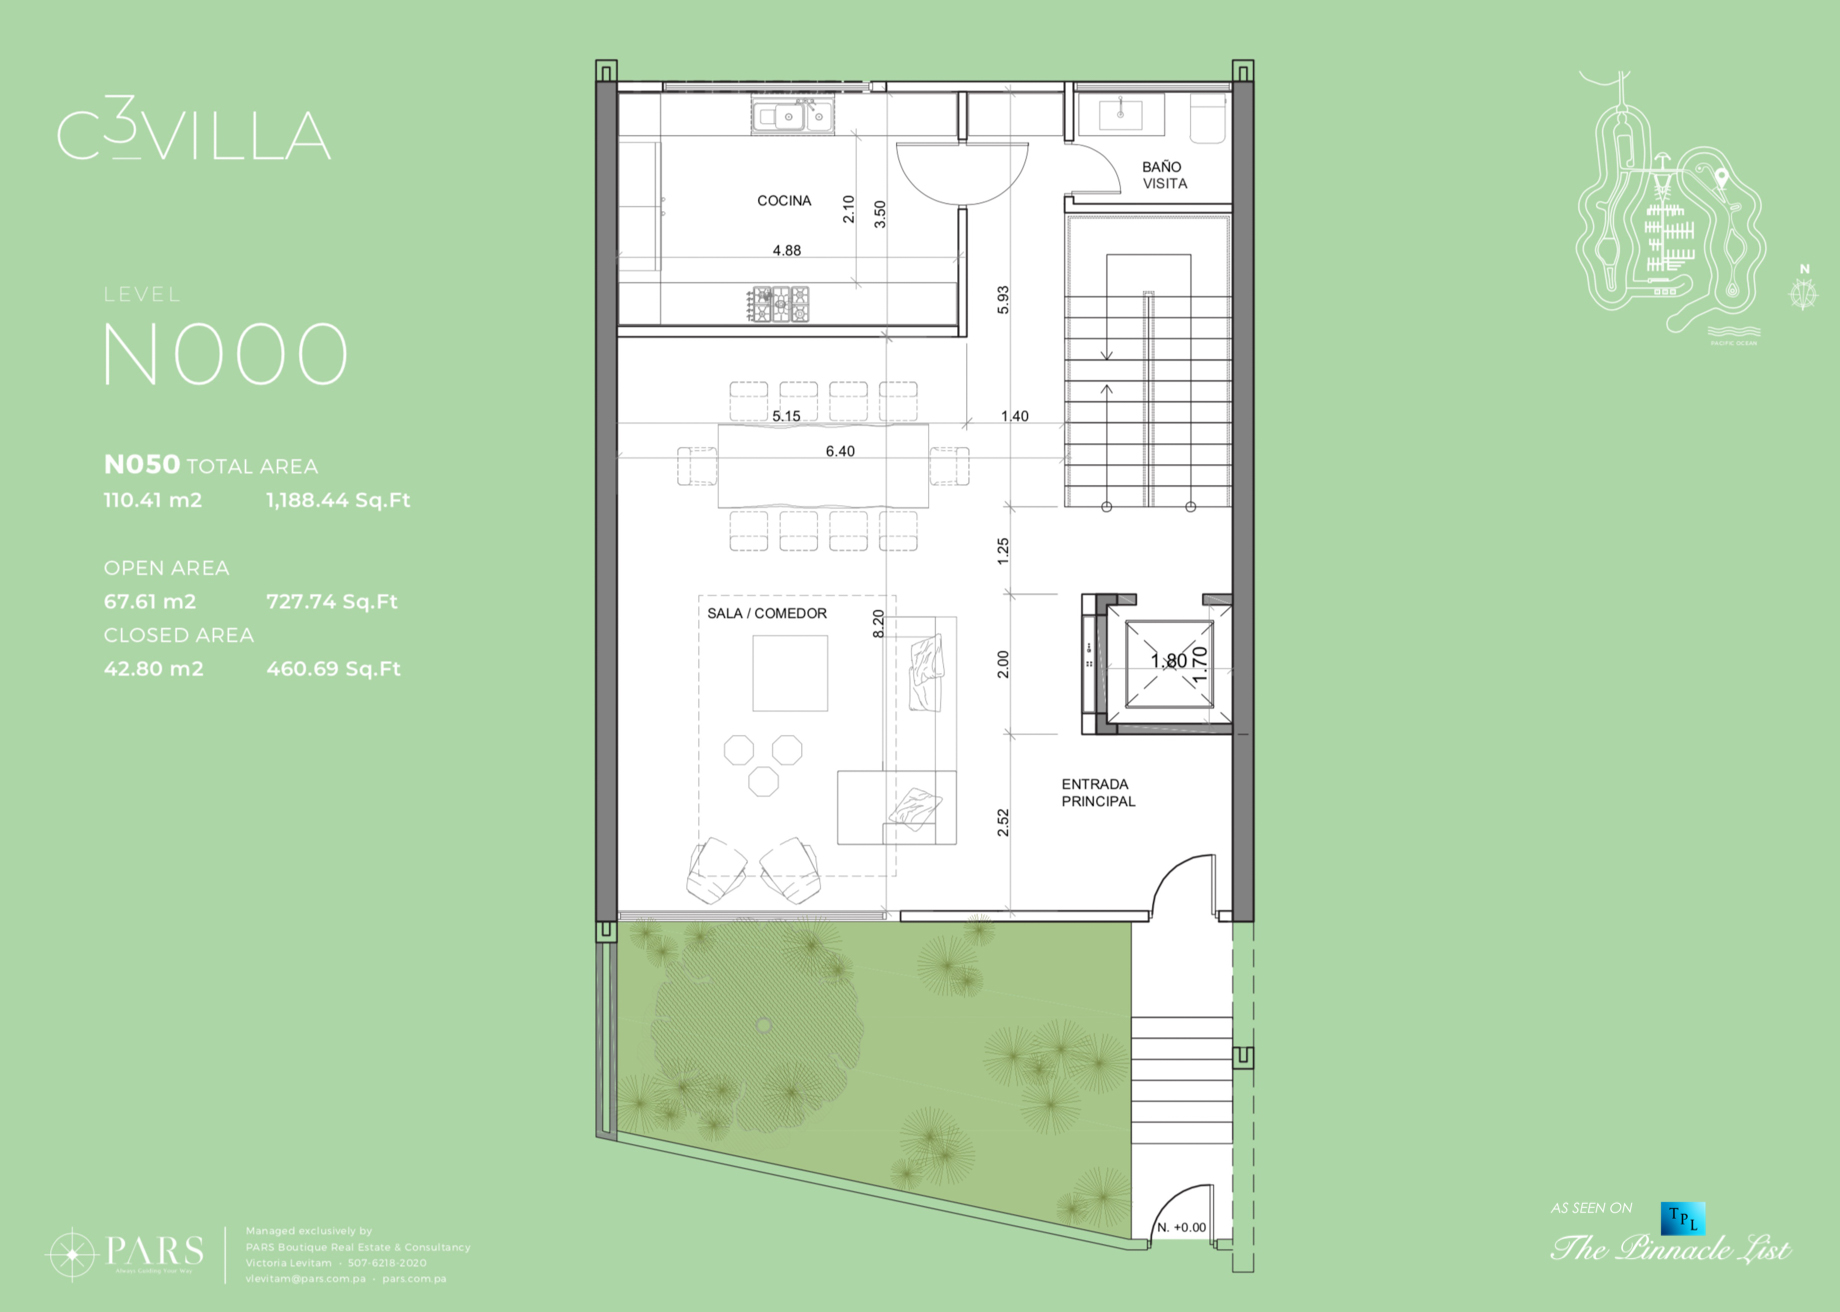 C3 Villa – Ocean Reef Islands, Panama – Floor Plans N000 Level